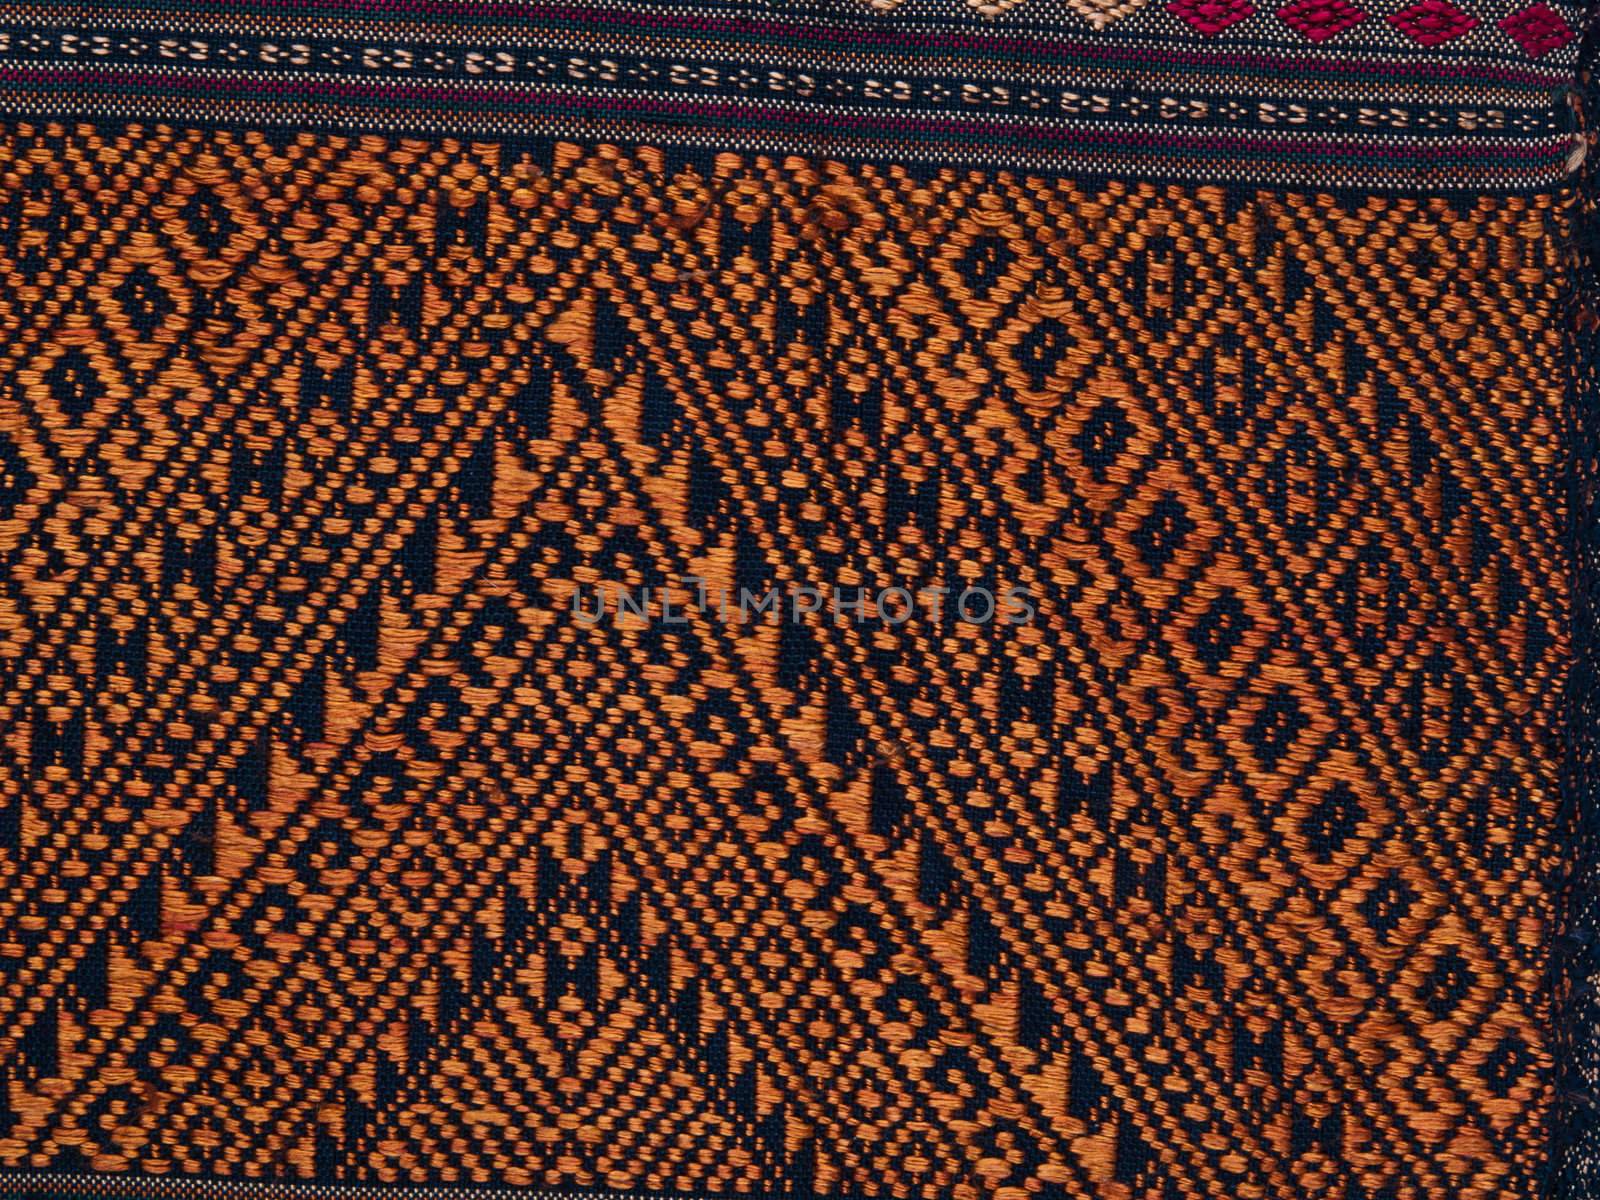 traditional Thai handmade fabric texture background